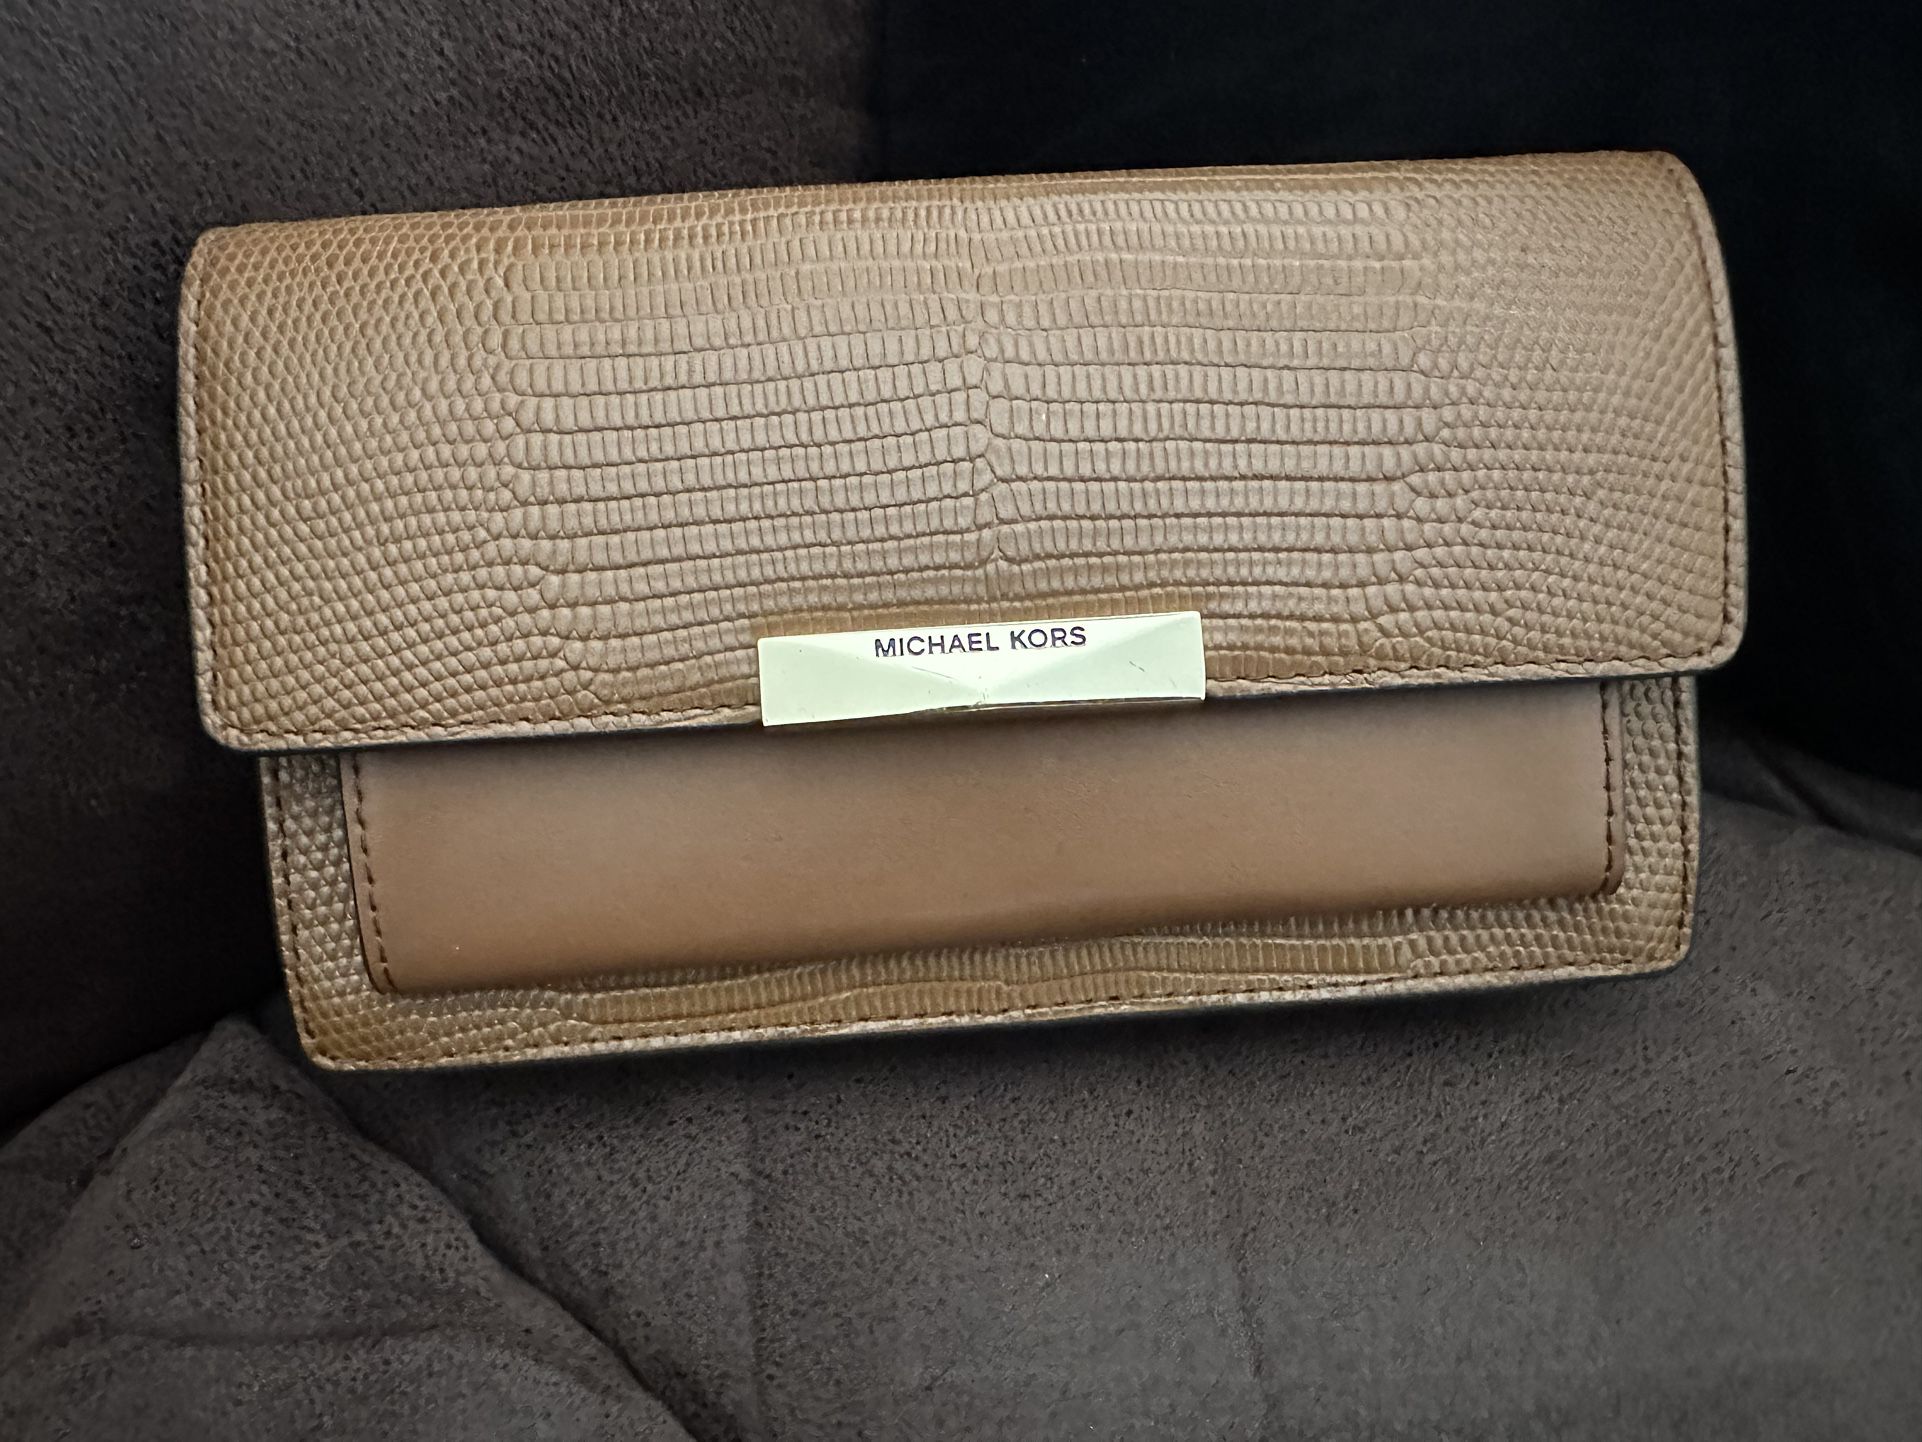 Michael Kors Bag Clutch/Wallet